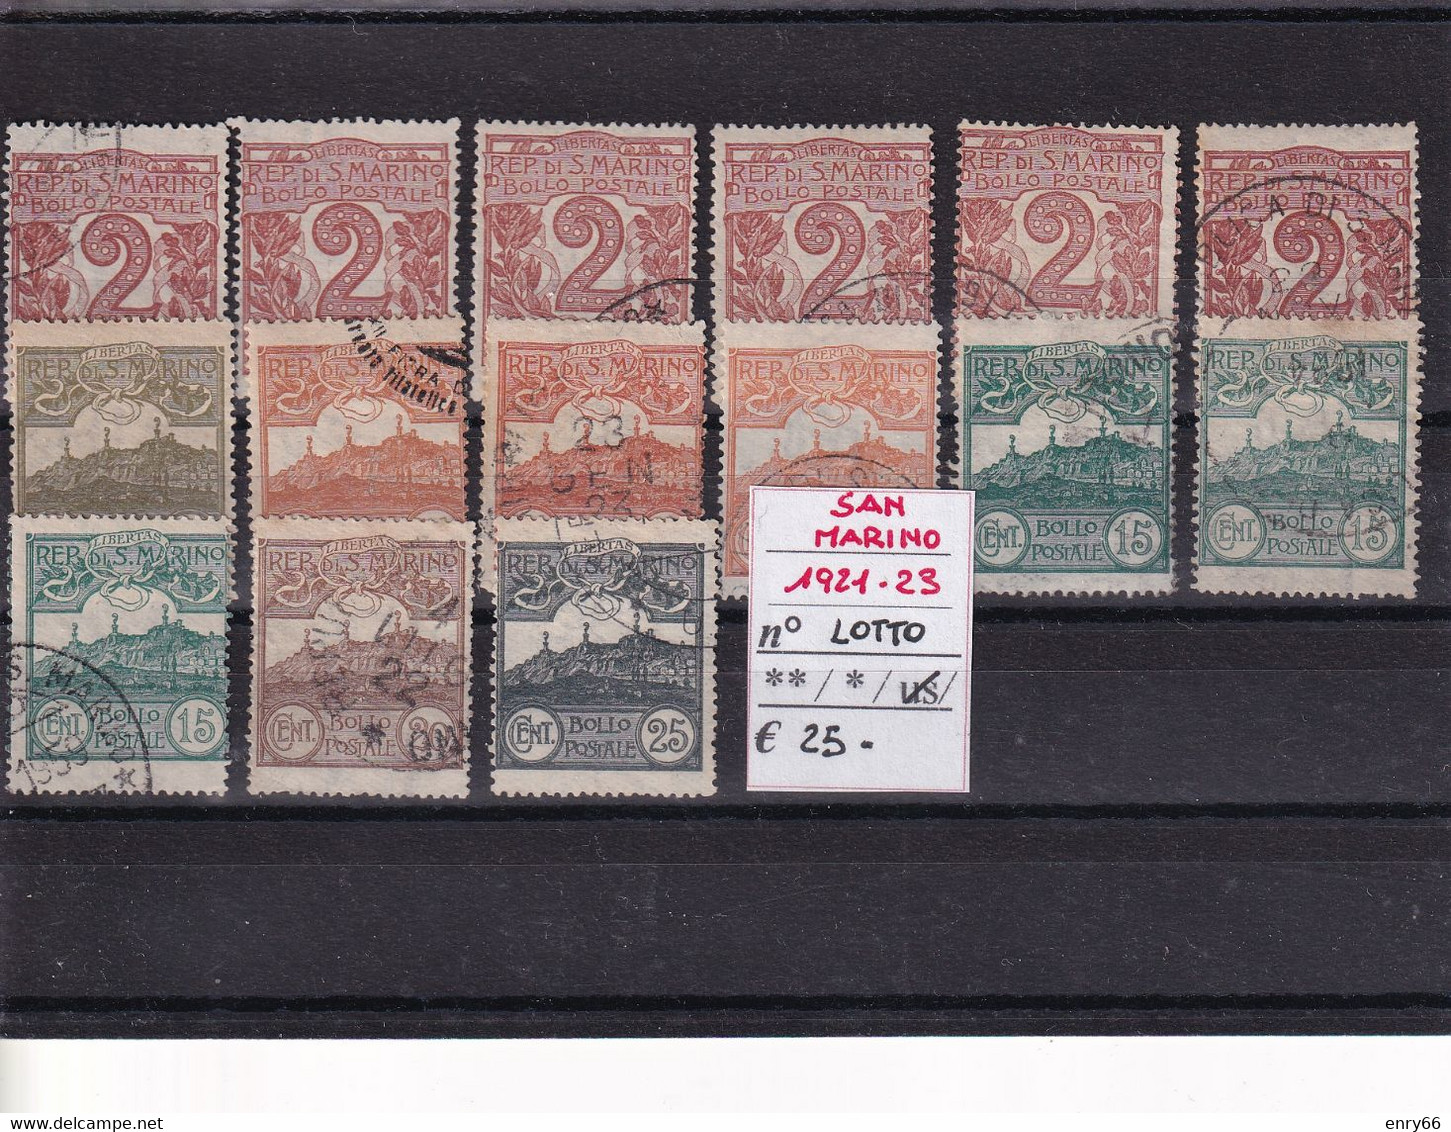 SAN MARINO LOTTO 1921-23 - Used Stamps